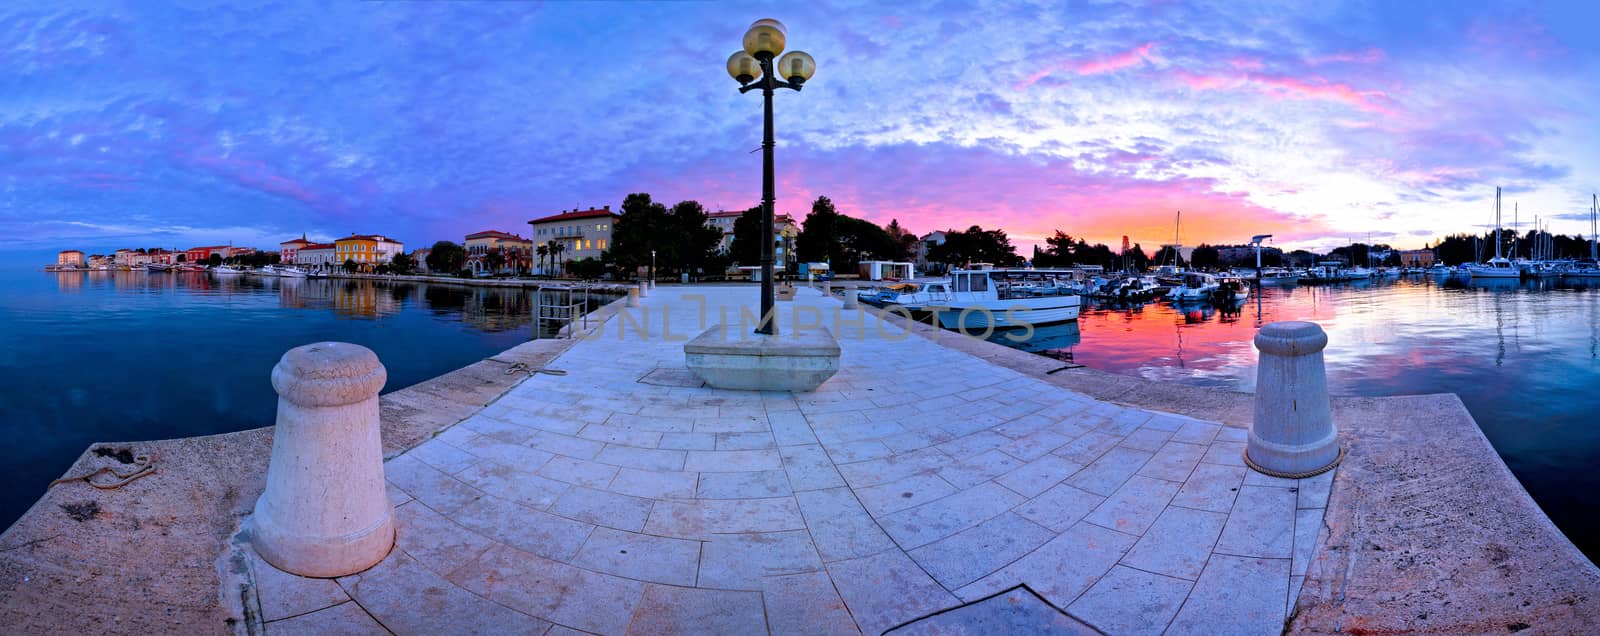 Town of Porec morning sunrise panoramic view from pier, Istria region of Croatia